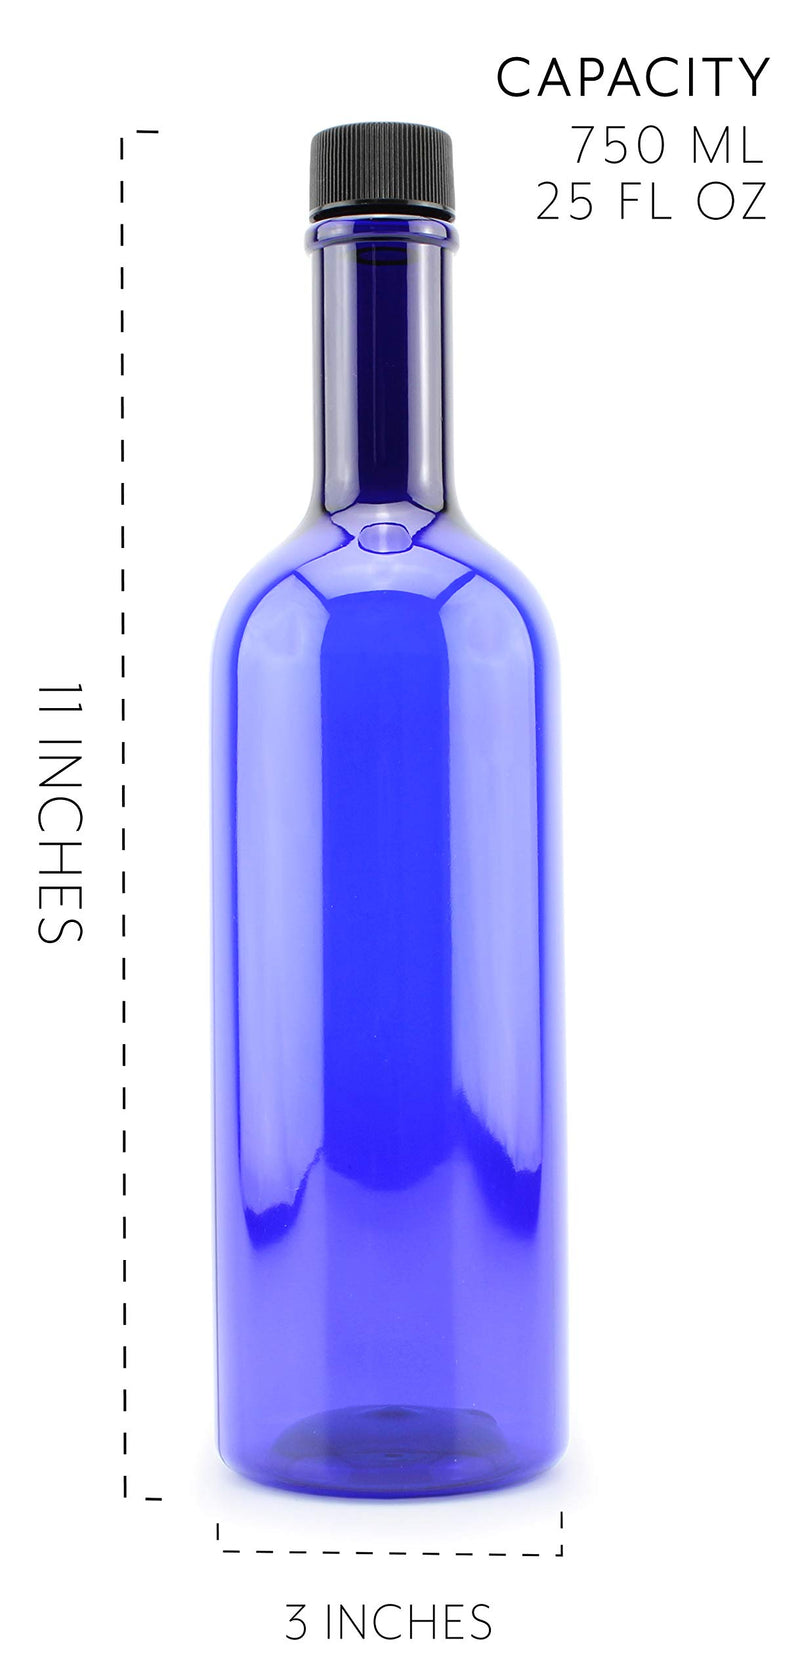  [AUSTRALIA] - Cornucopia Plastic Wine Bottles (10-Pack, Blue); Empty Bordeaux-Style Wine Bottles with Screw Caps and Seals 10